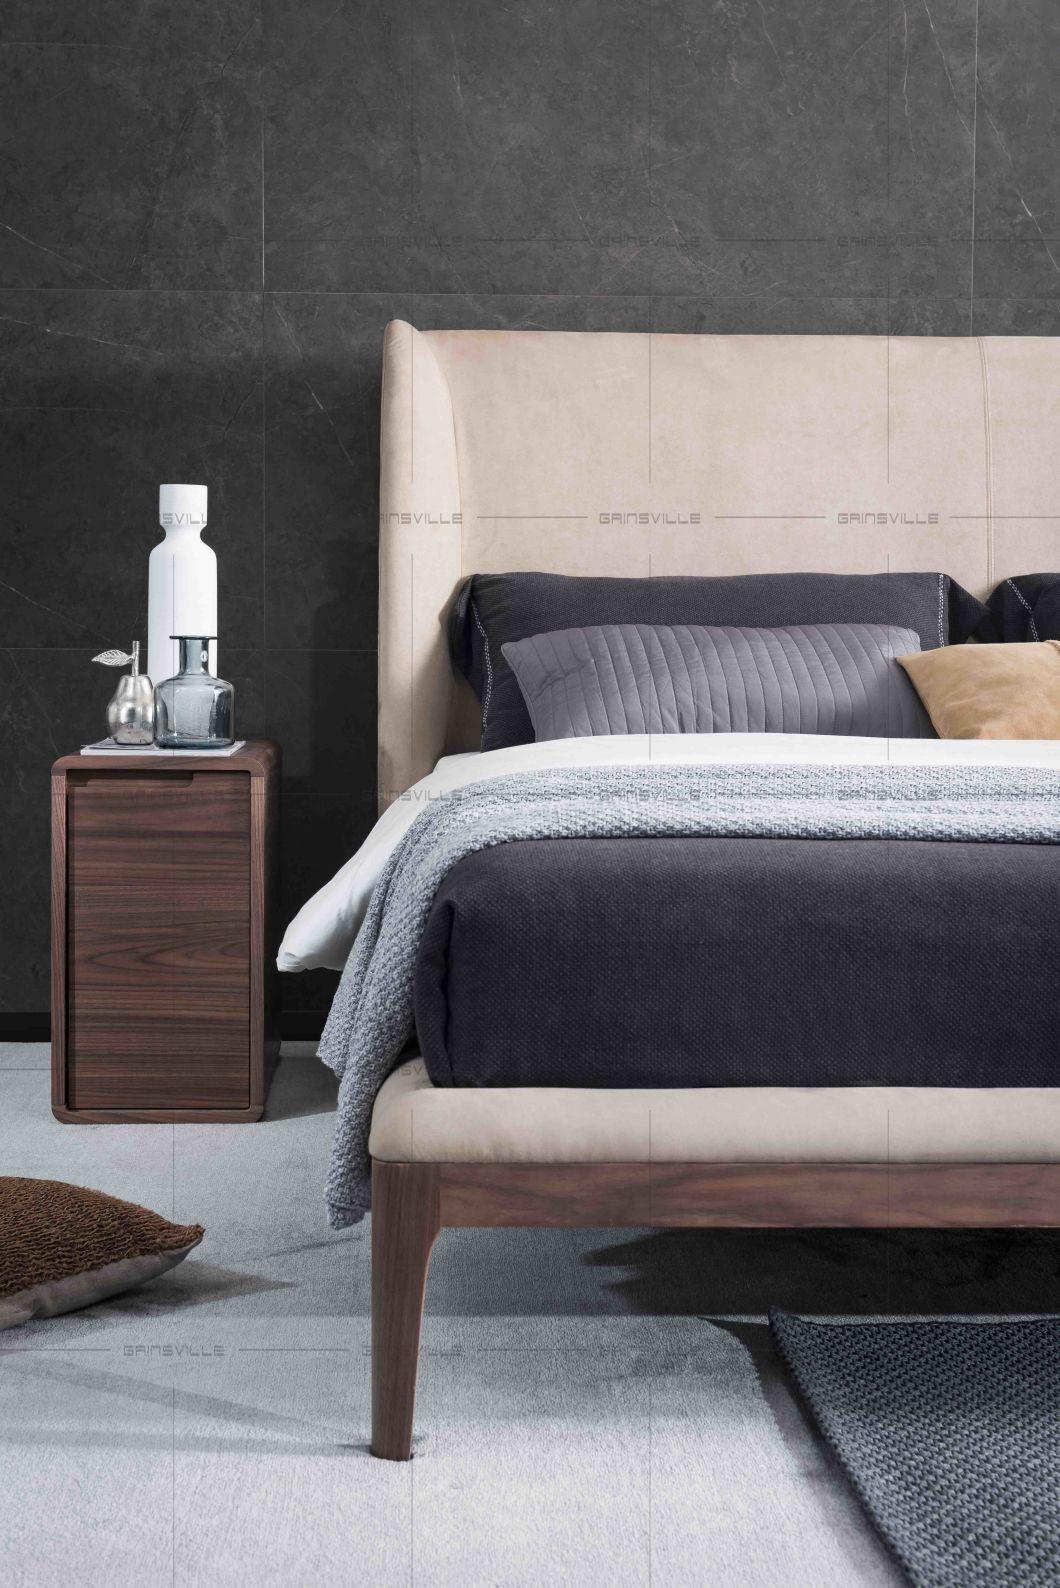 China Supplier Home Decoration Wooden Design Modern Bedroom Furniture